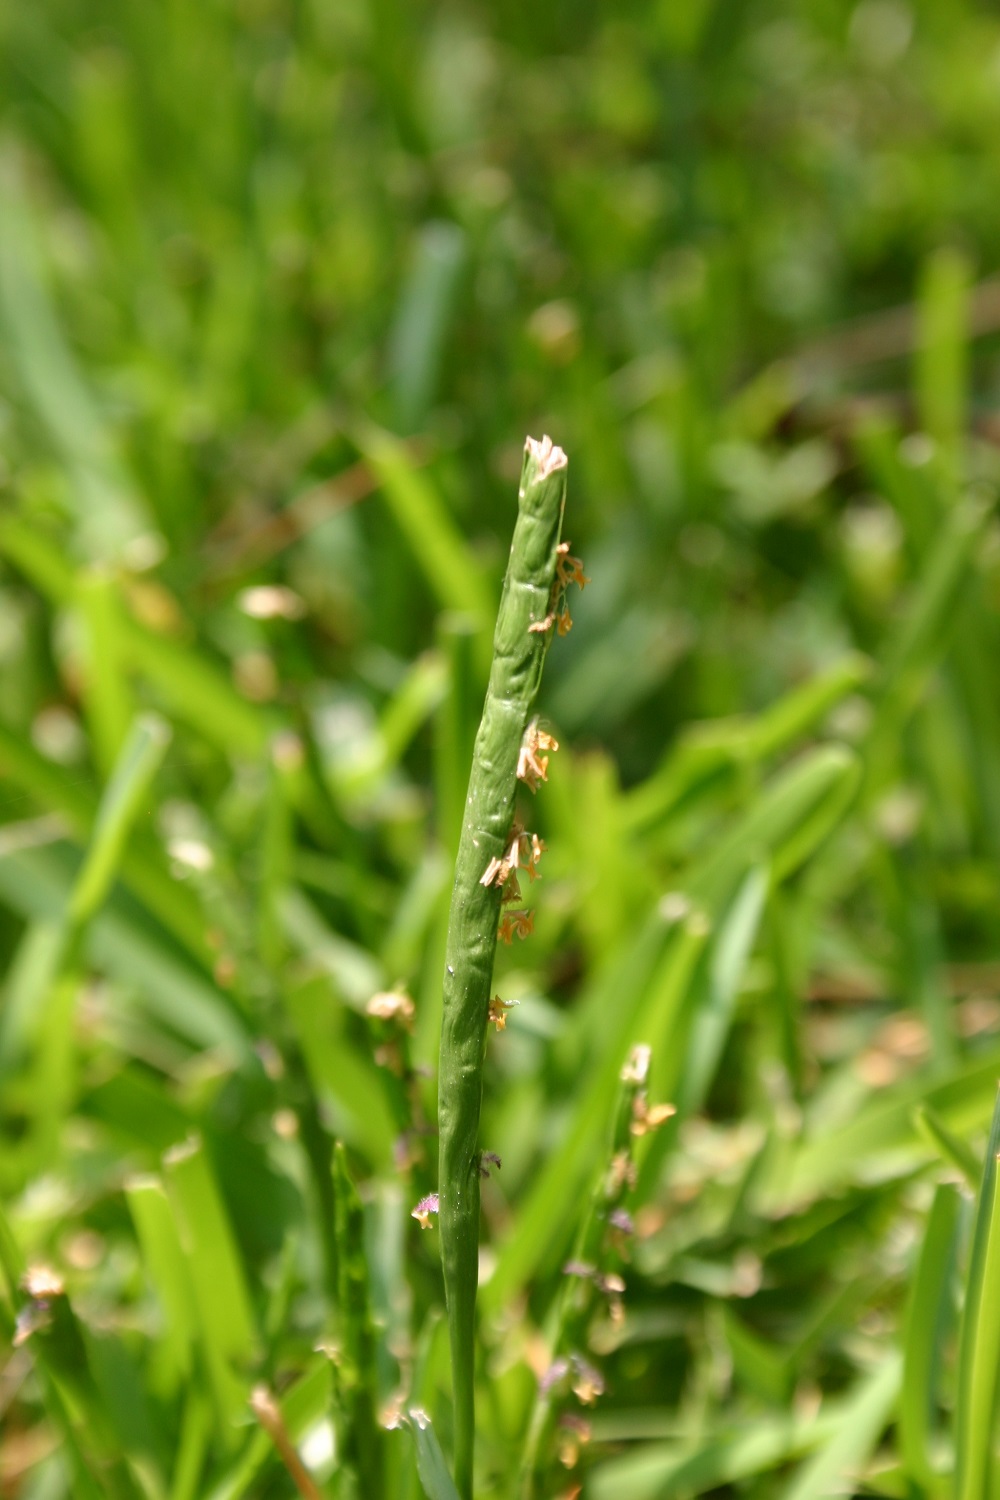 Centipedegrass vs St. Augustine grass | Walter Reeves: The Georgia Gardener